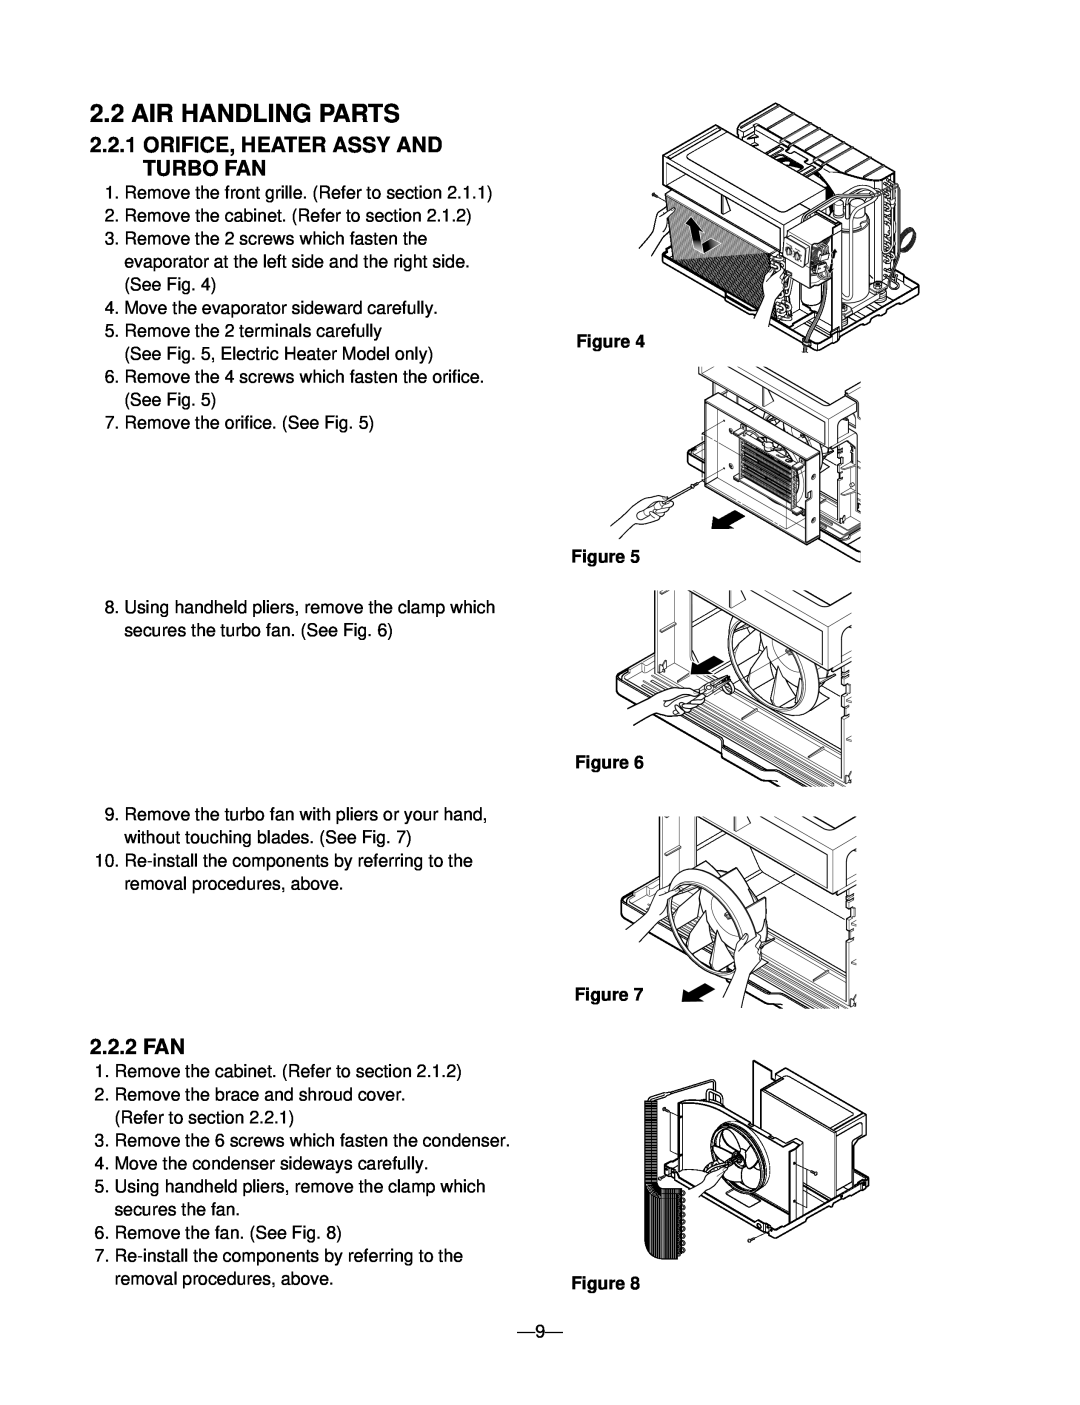 Heat Controller BD-81, BD-101, BD-123, BDE-103, BDE-123 Air Handling Parts, 2.2.1ORIFICE, HEATER ASSY AND TURBO FAN, 2.2.2FAN 